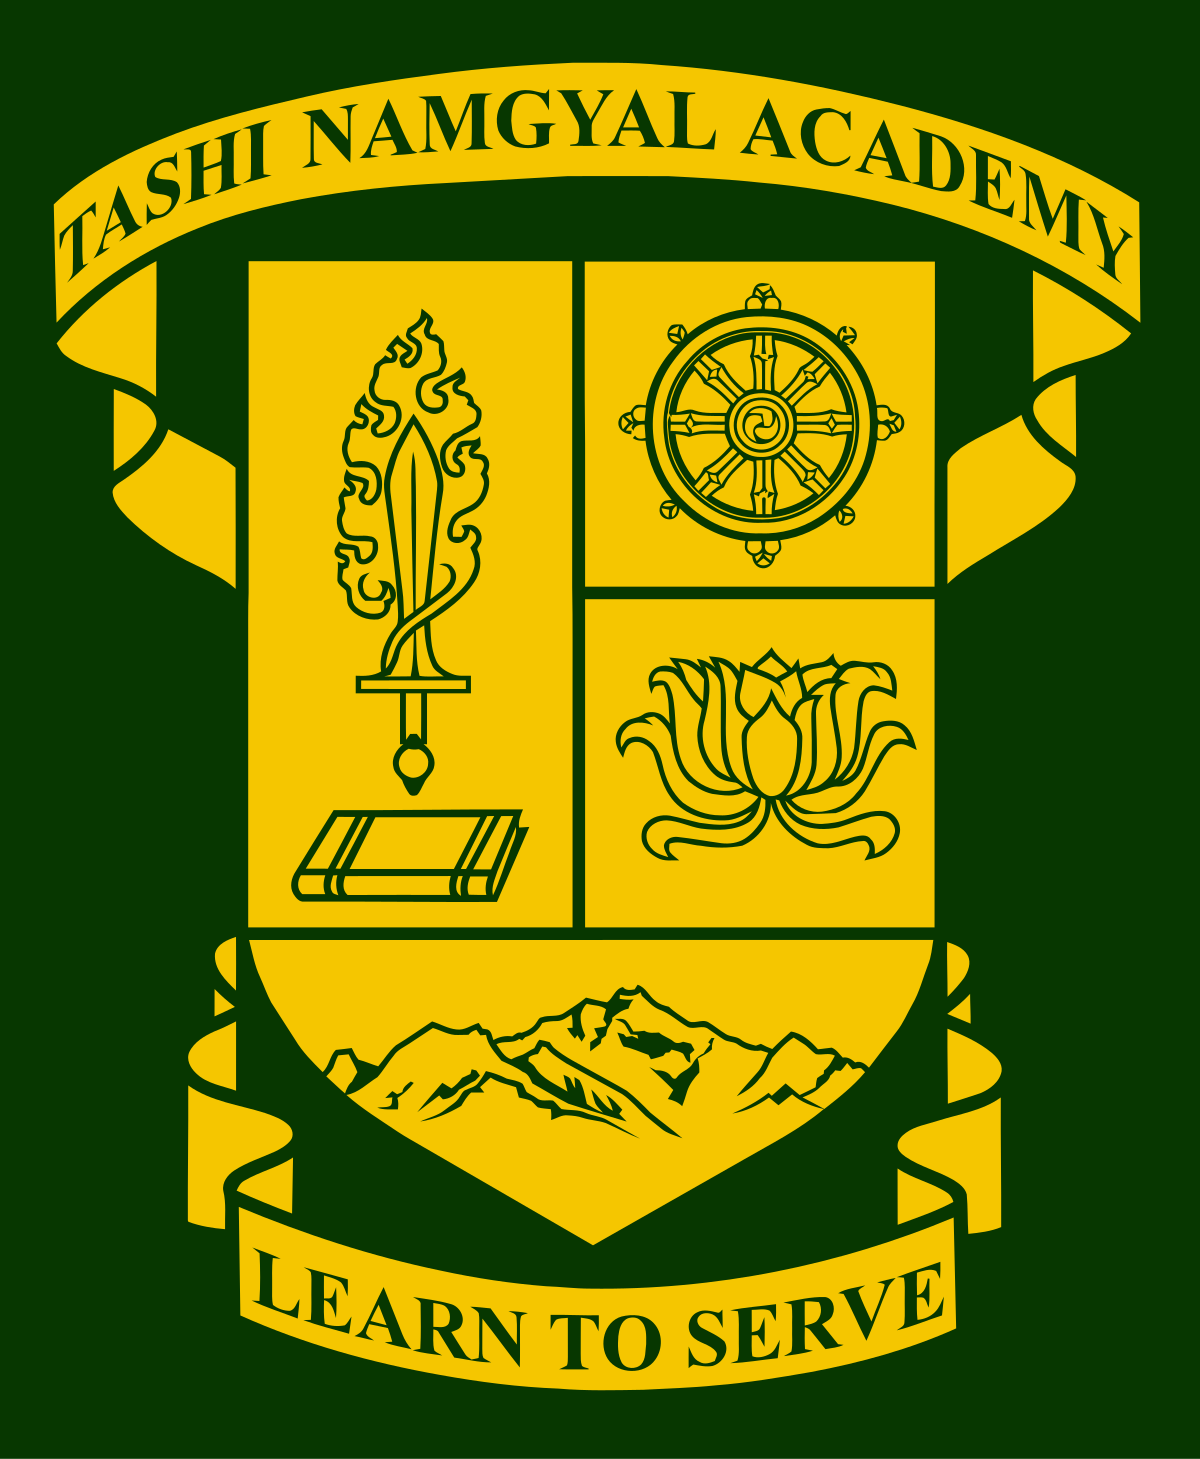 Greenhouse Academy - Wikipedia